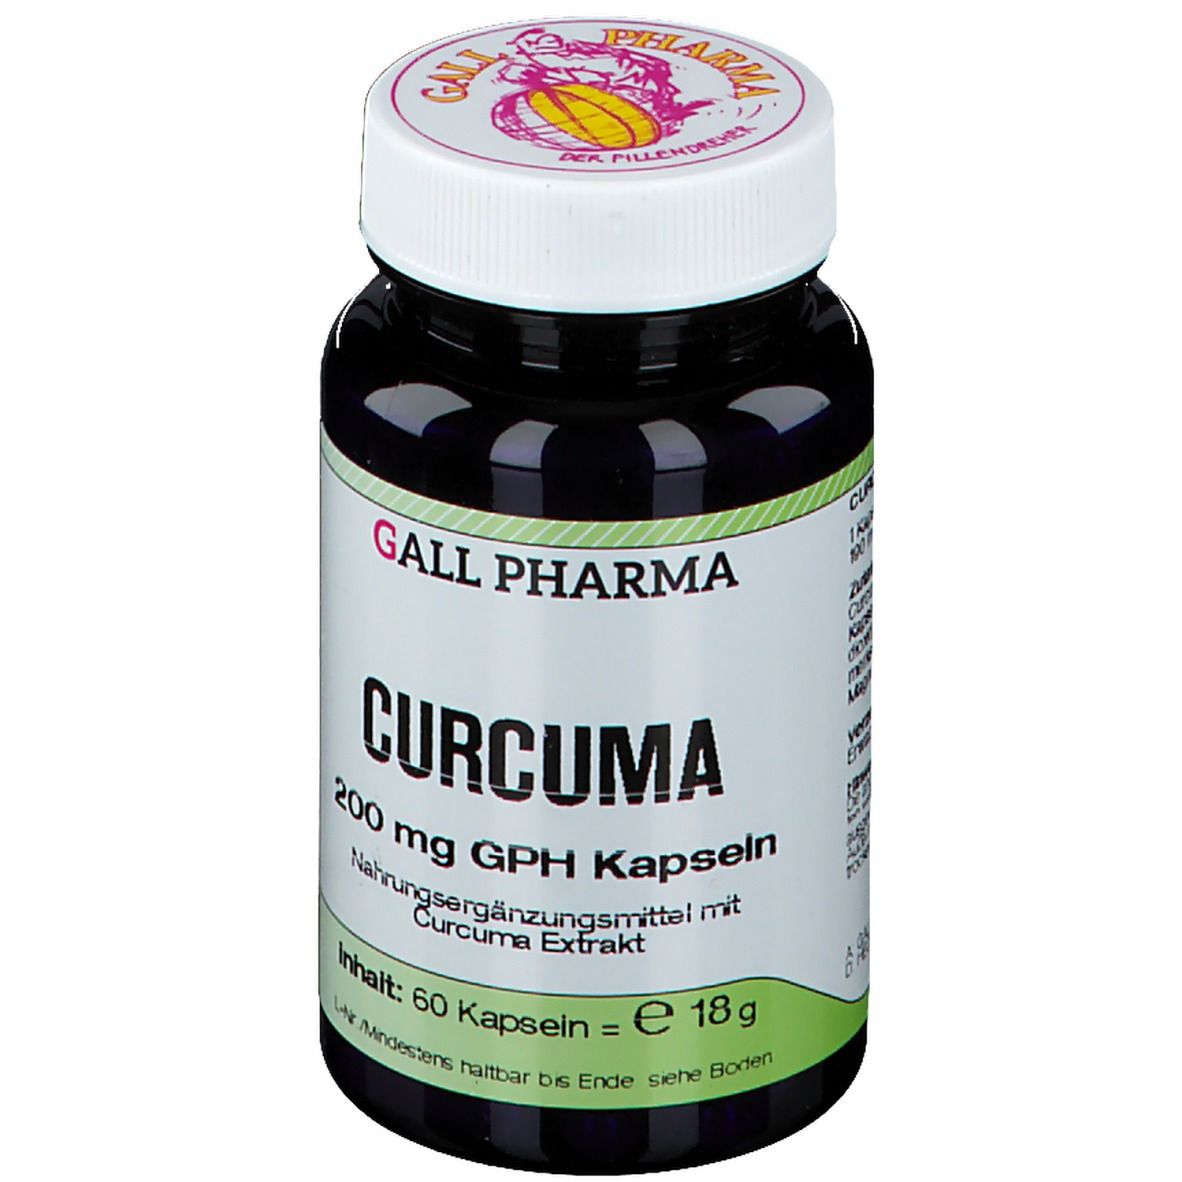 GALL PHARMA Curcuma 200 mg